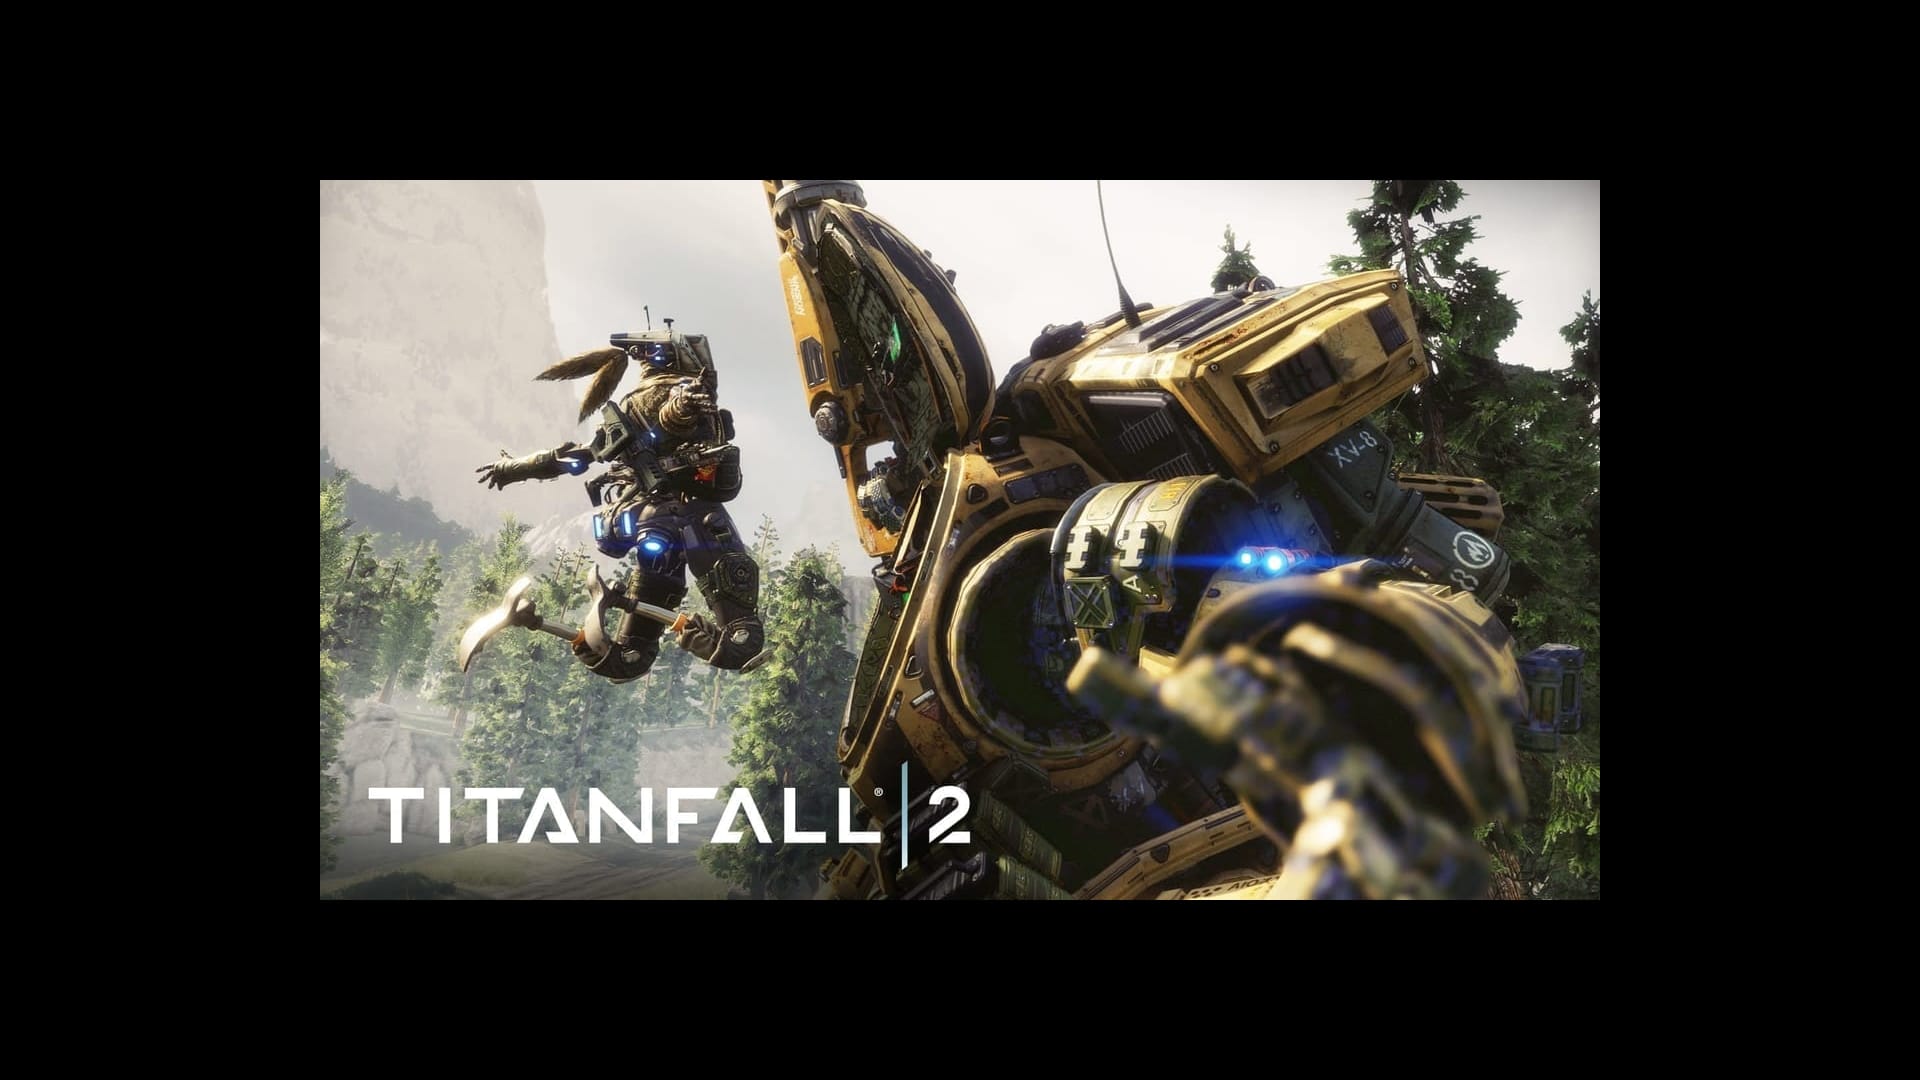 Aftrekken Met pensioen gaan Vermindering Titanfall 2 Review - What Is Love | TechRaptor